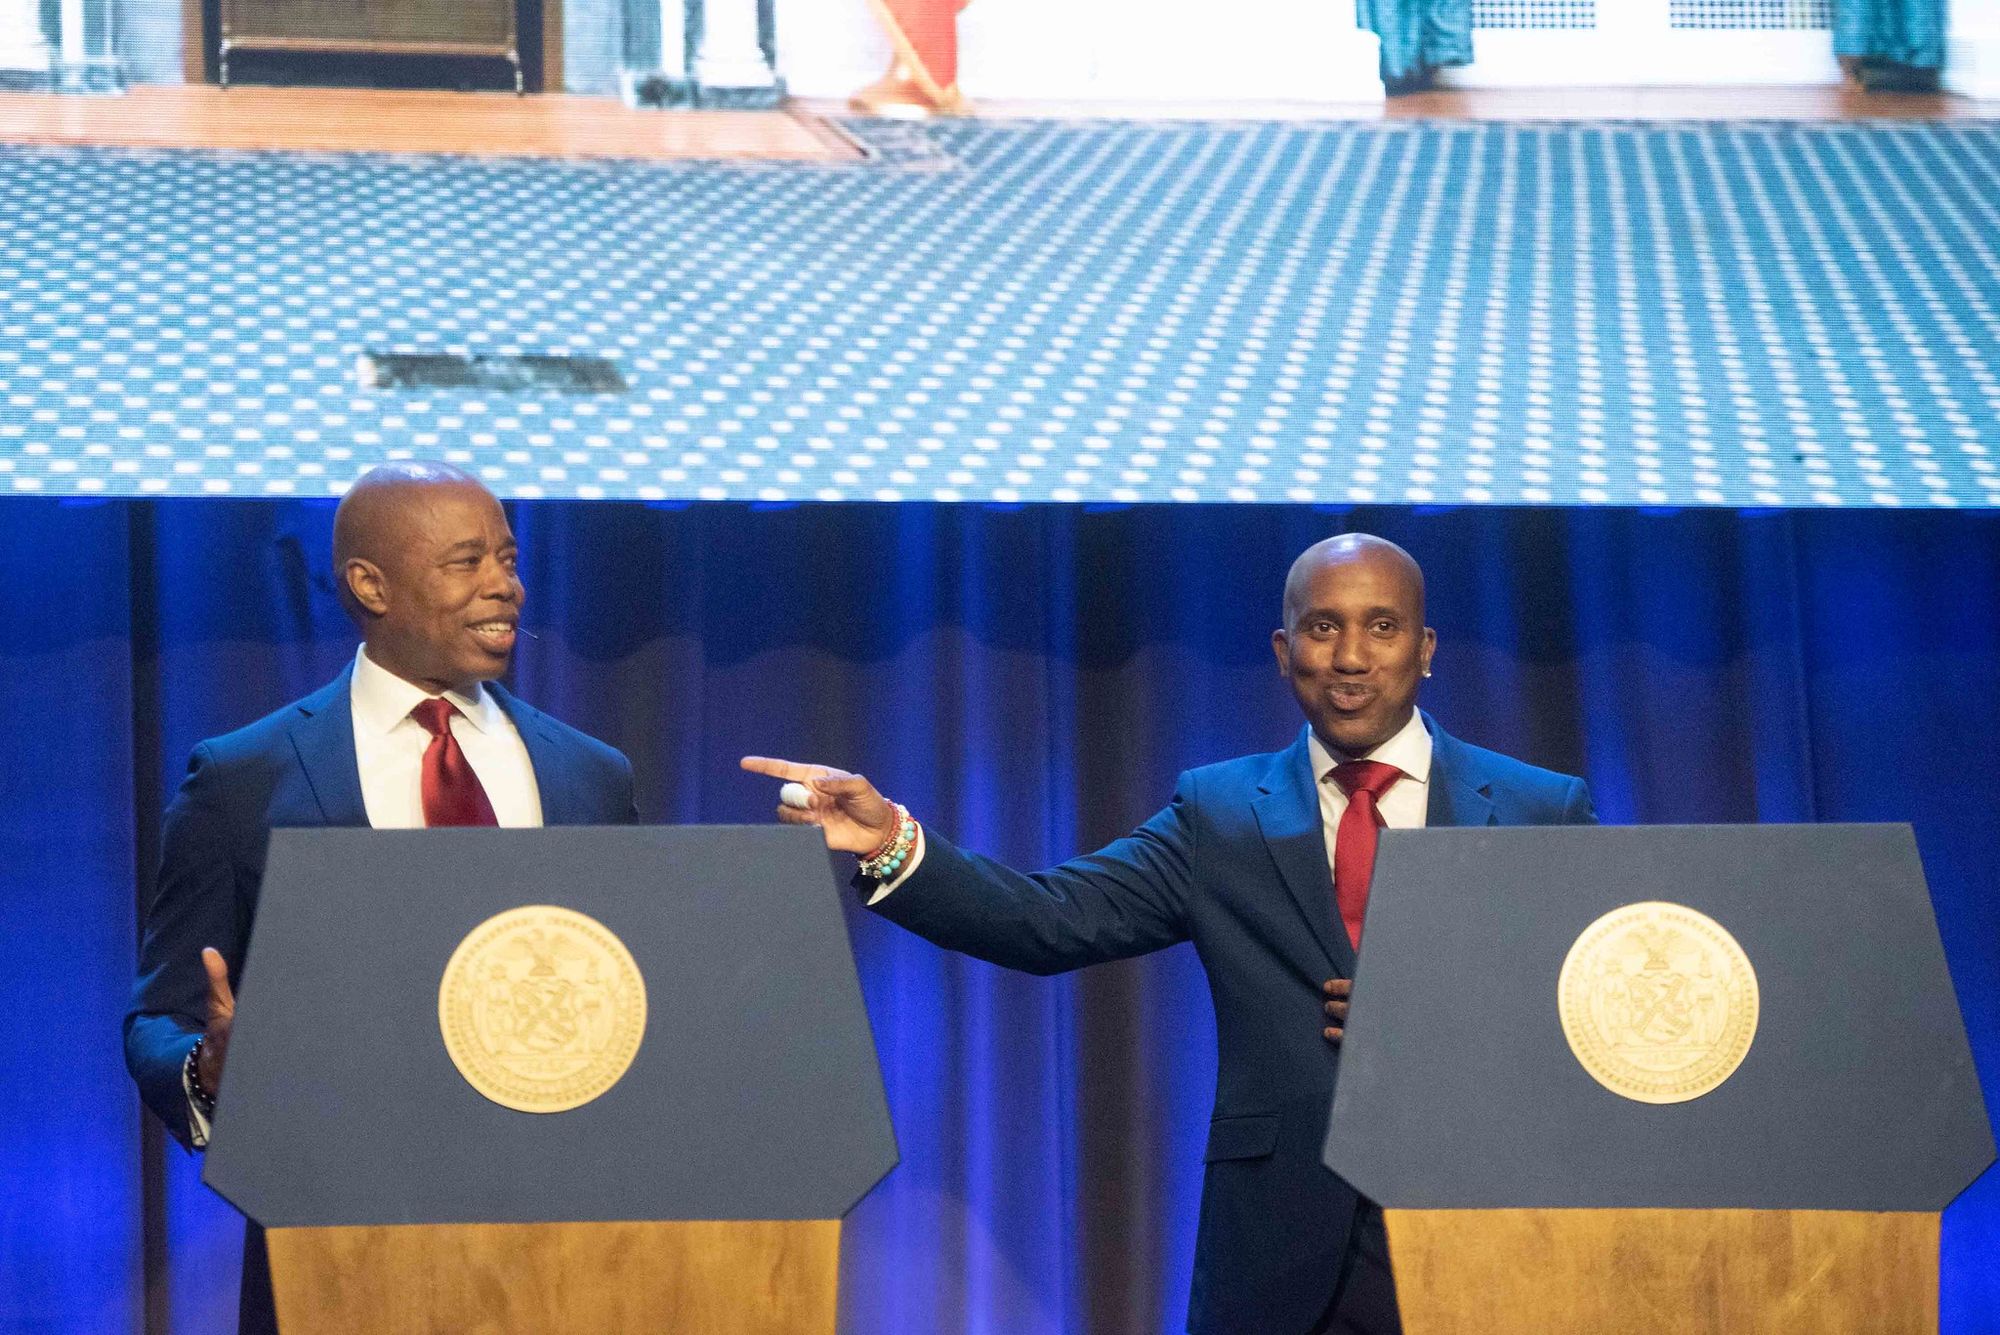 Chris Redd and New York City Mayor Eric Adams standing behind podiums.